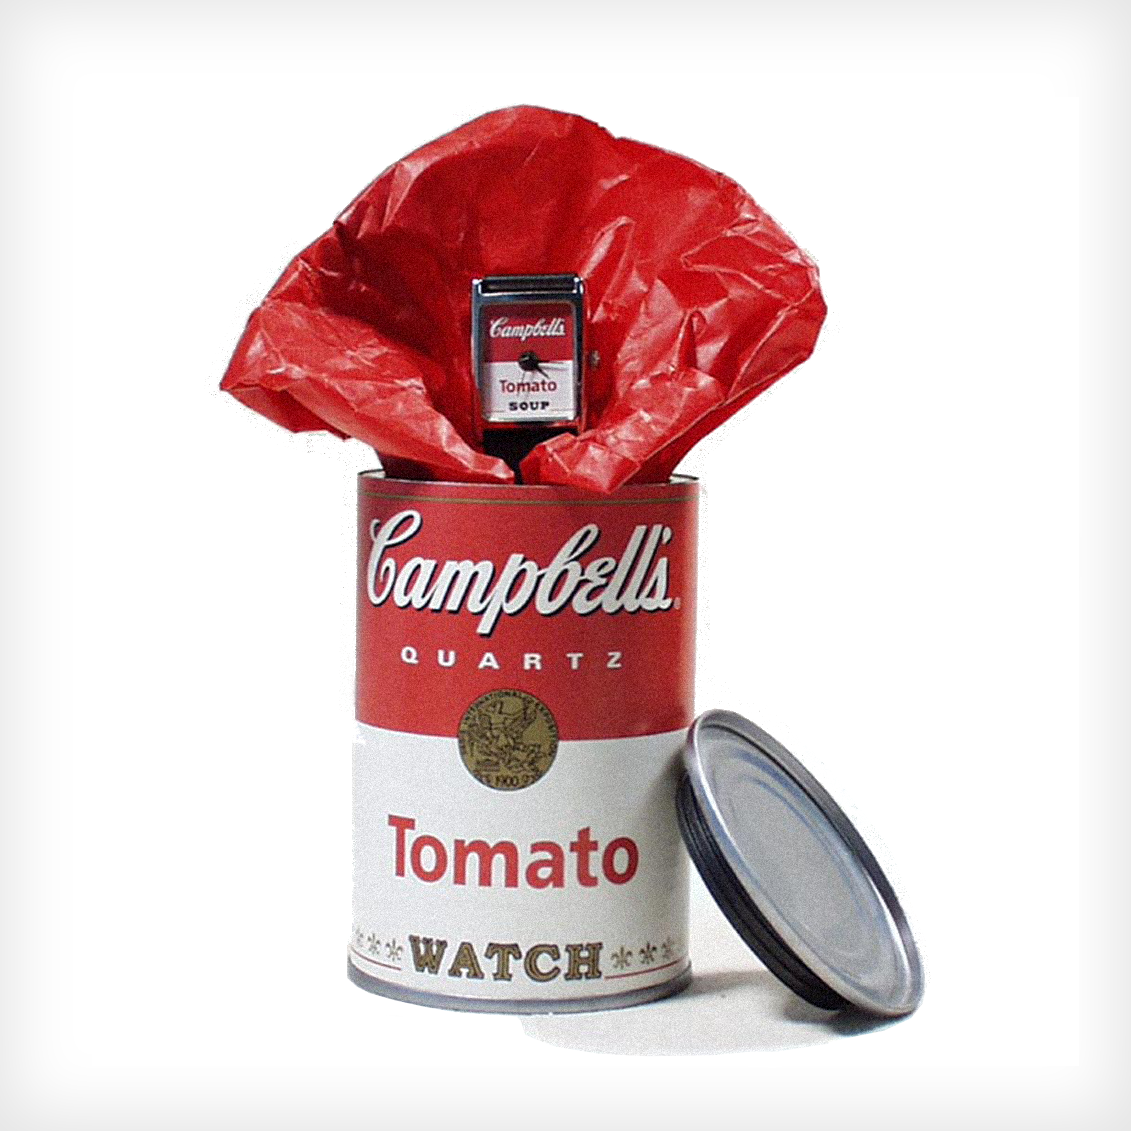 "Campbell's Soup" Wrist Watch